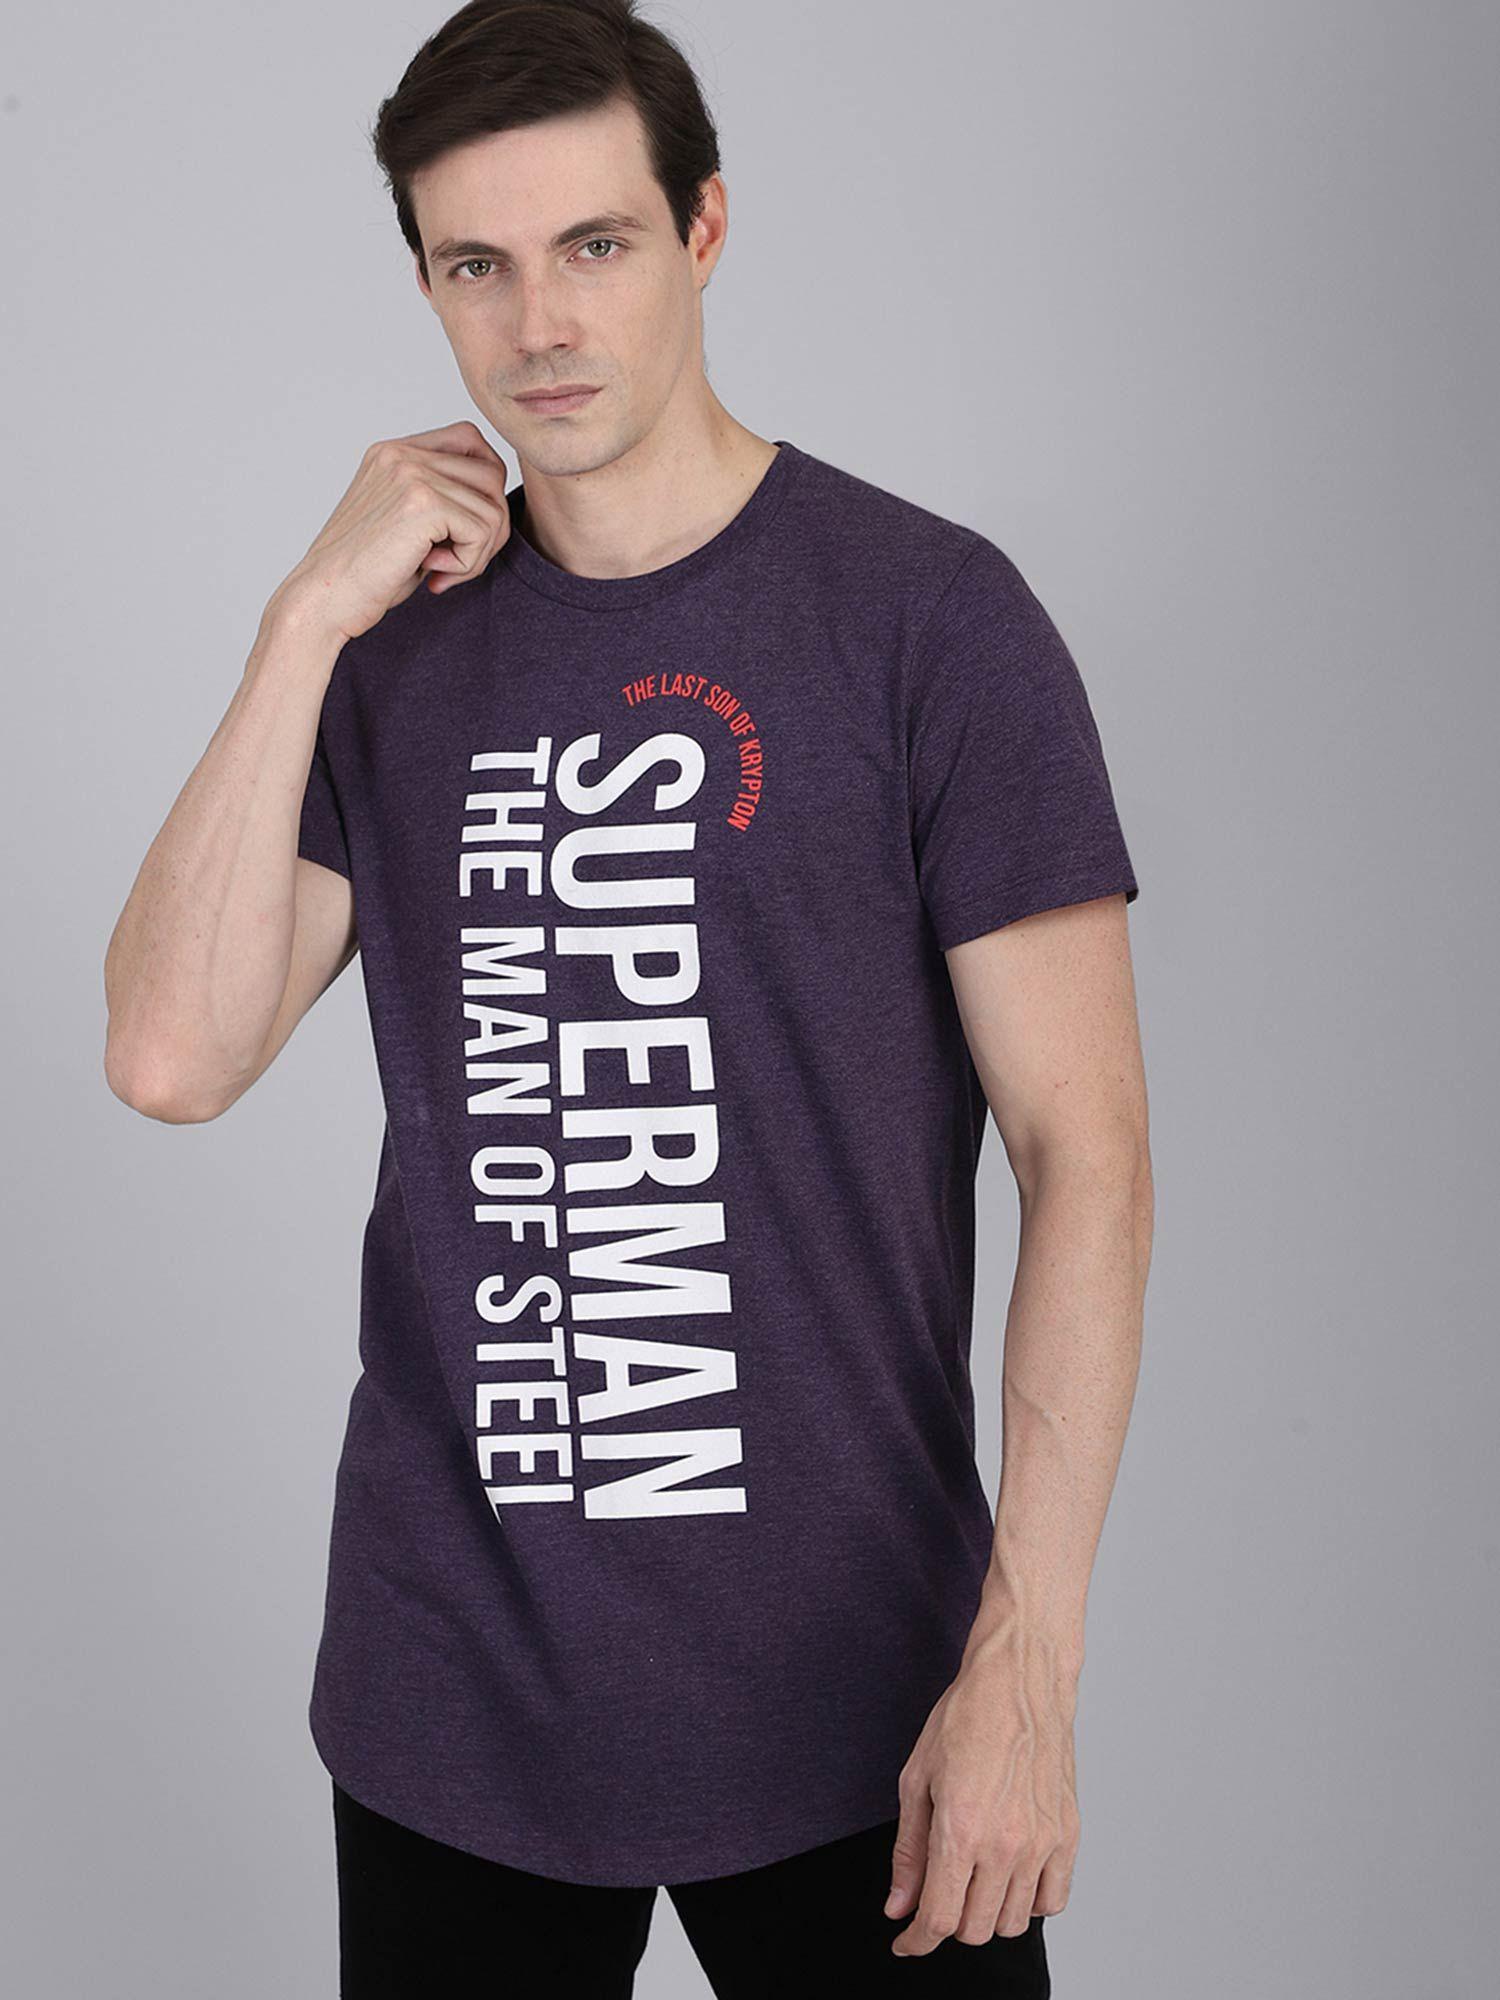 superman printed purple t-shirt for men